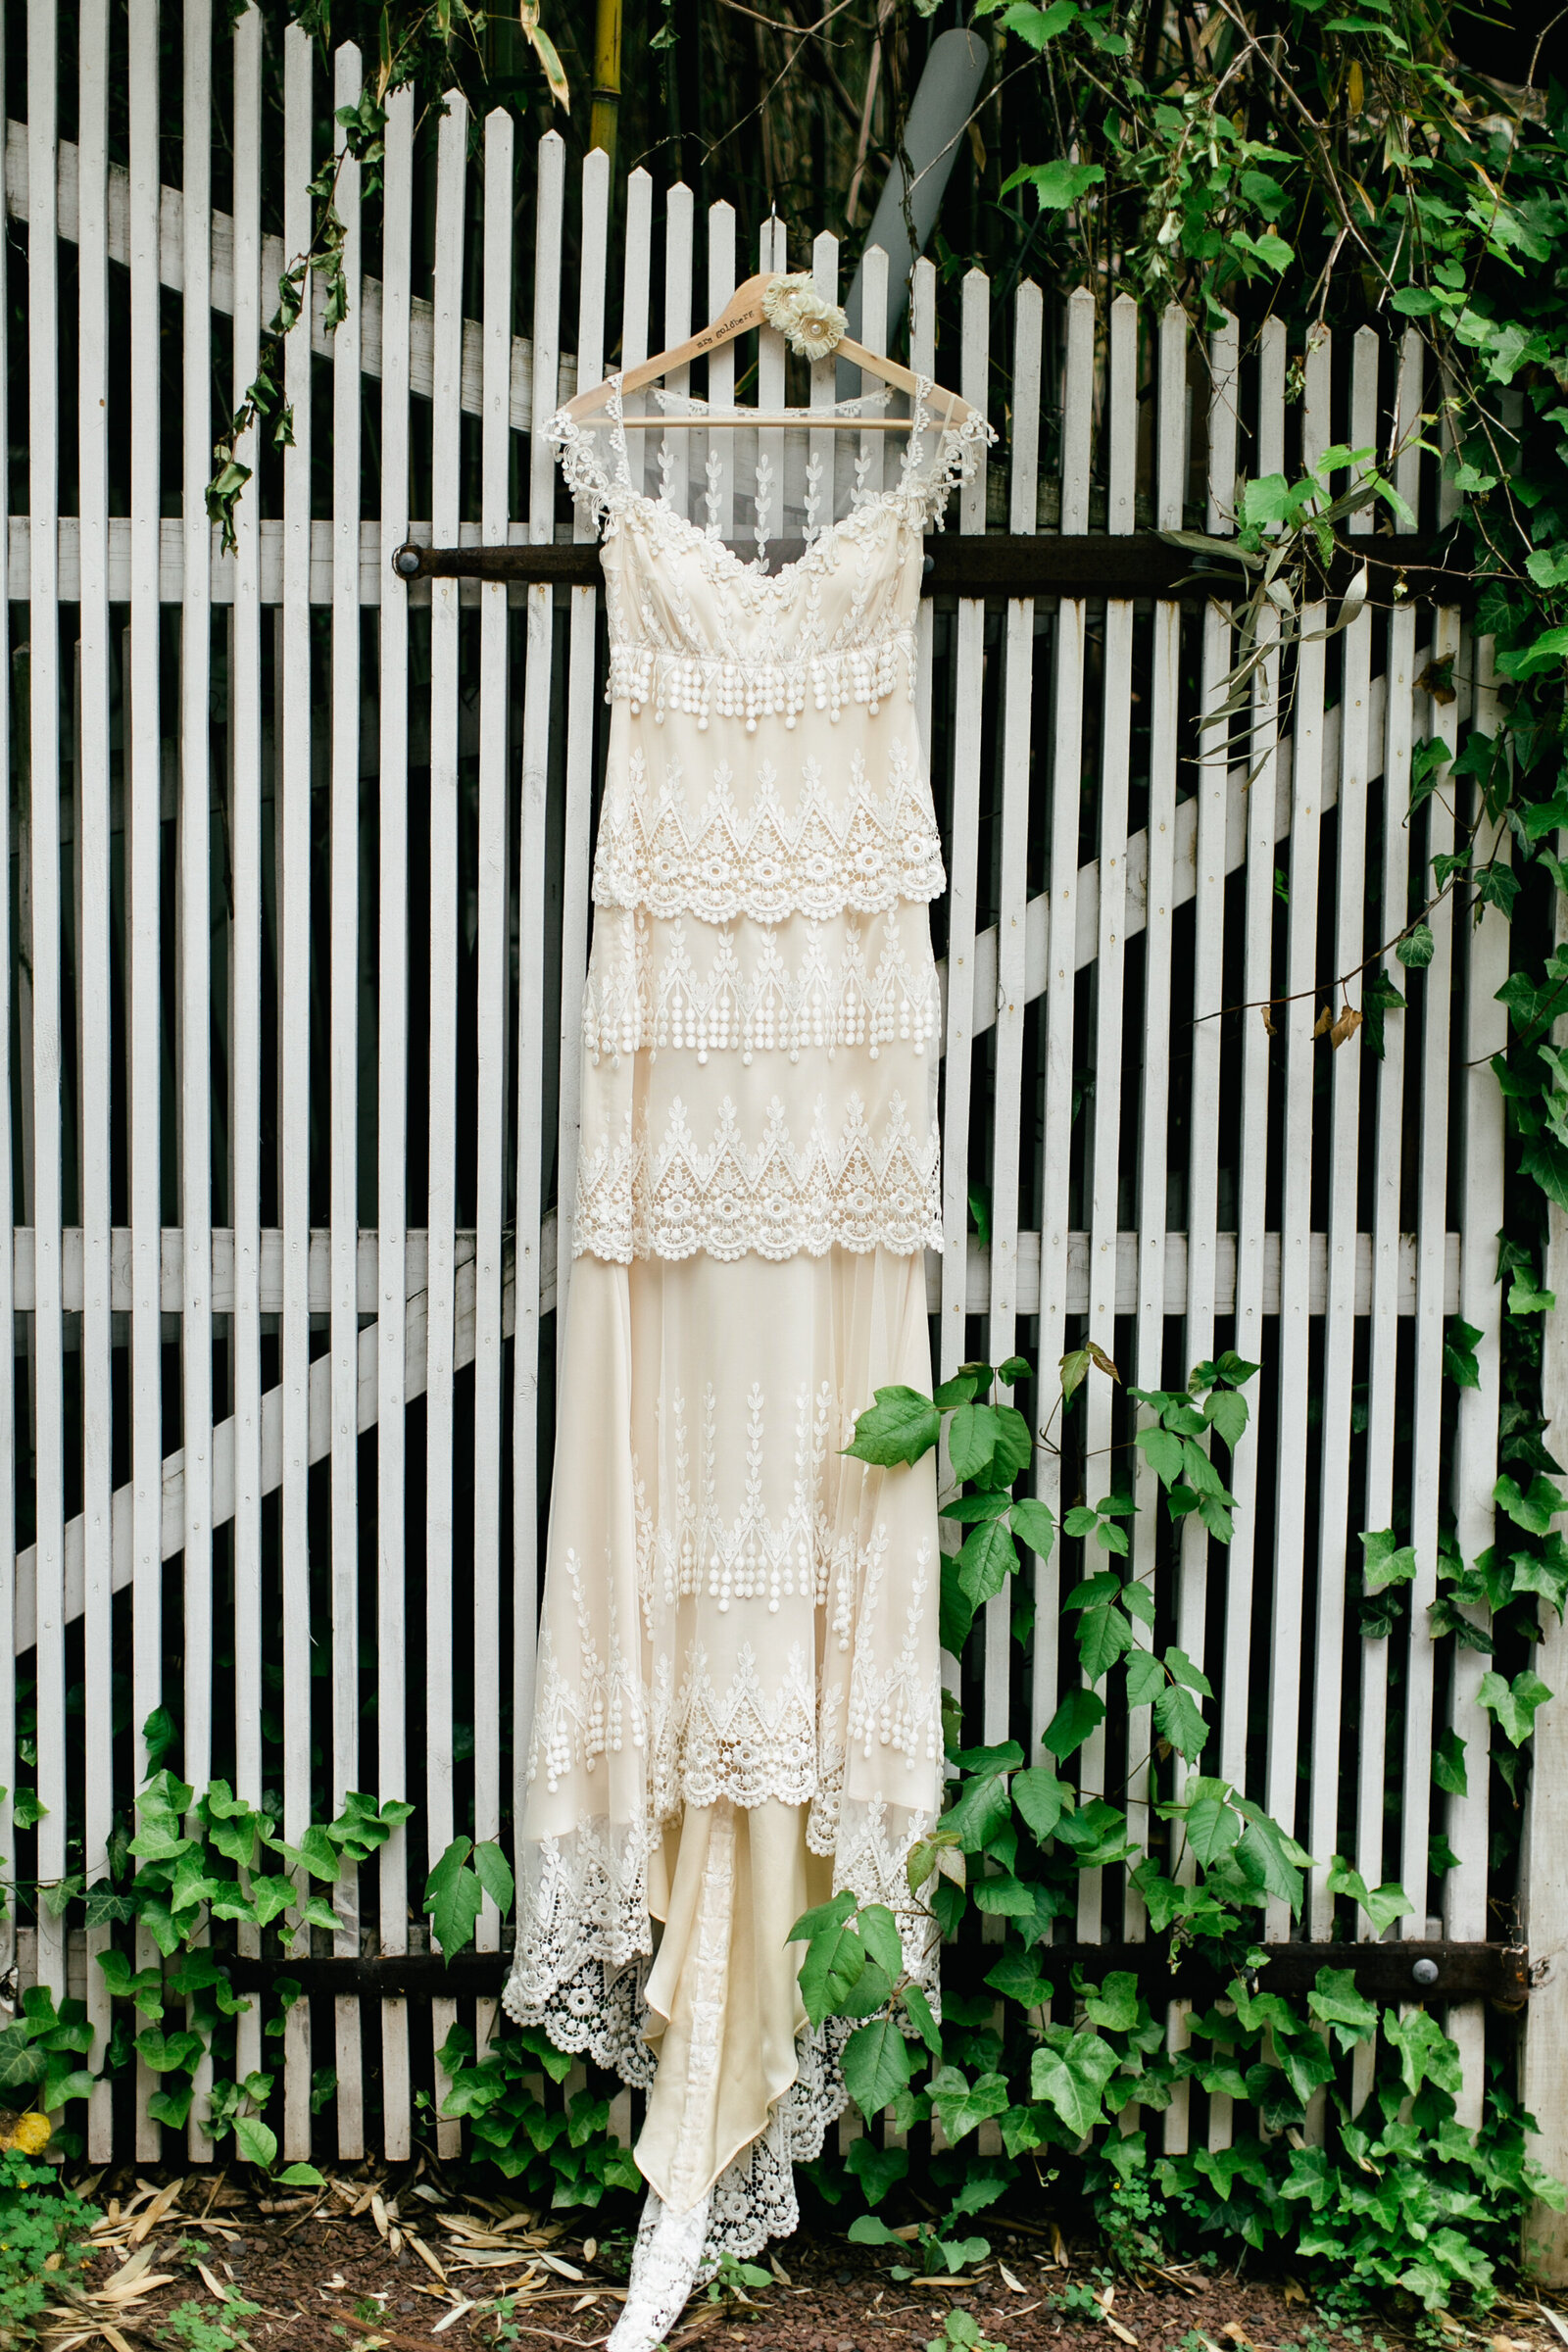 brides lace wedding dress hanging outside